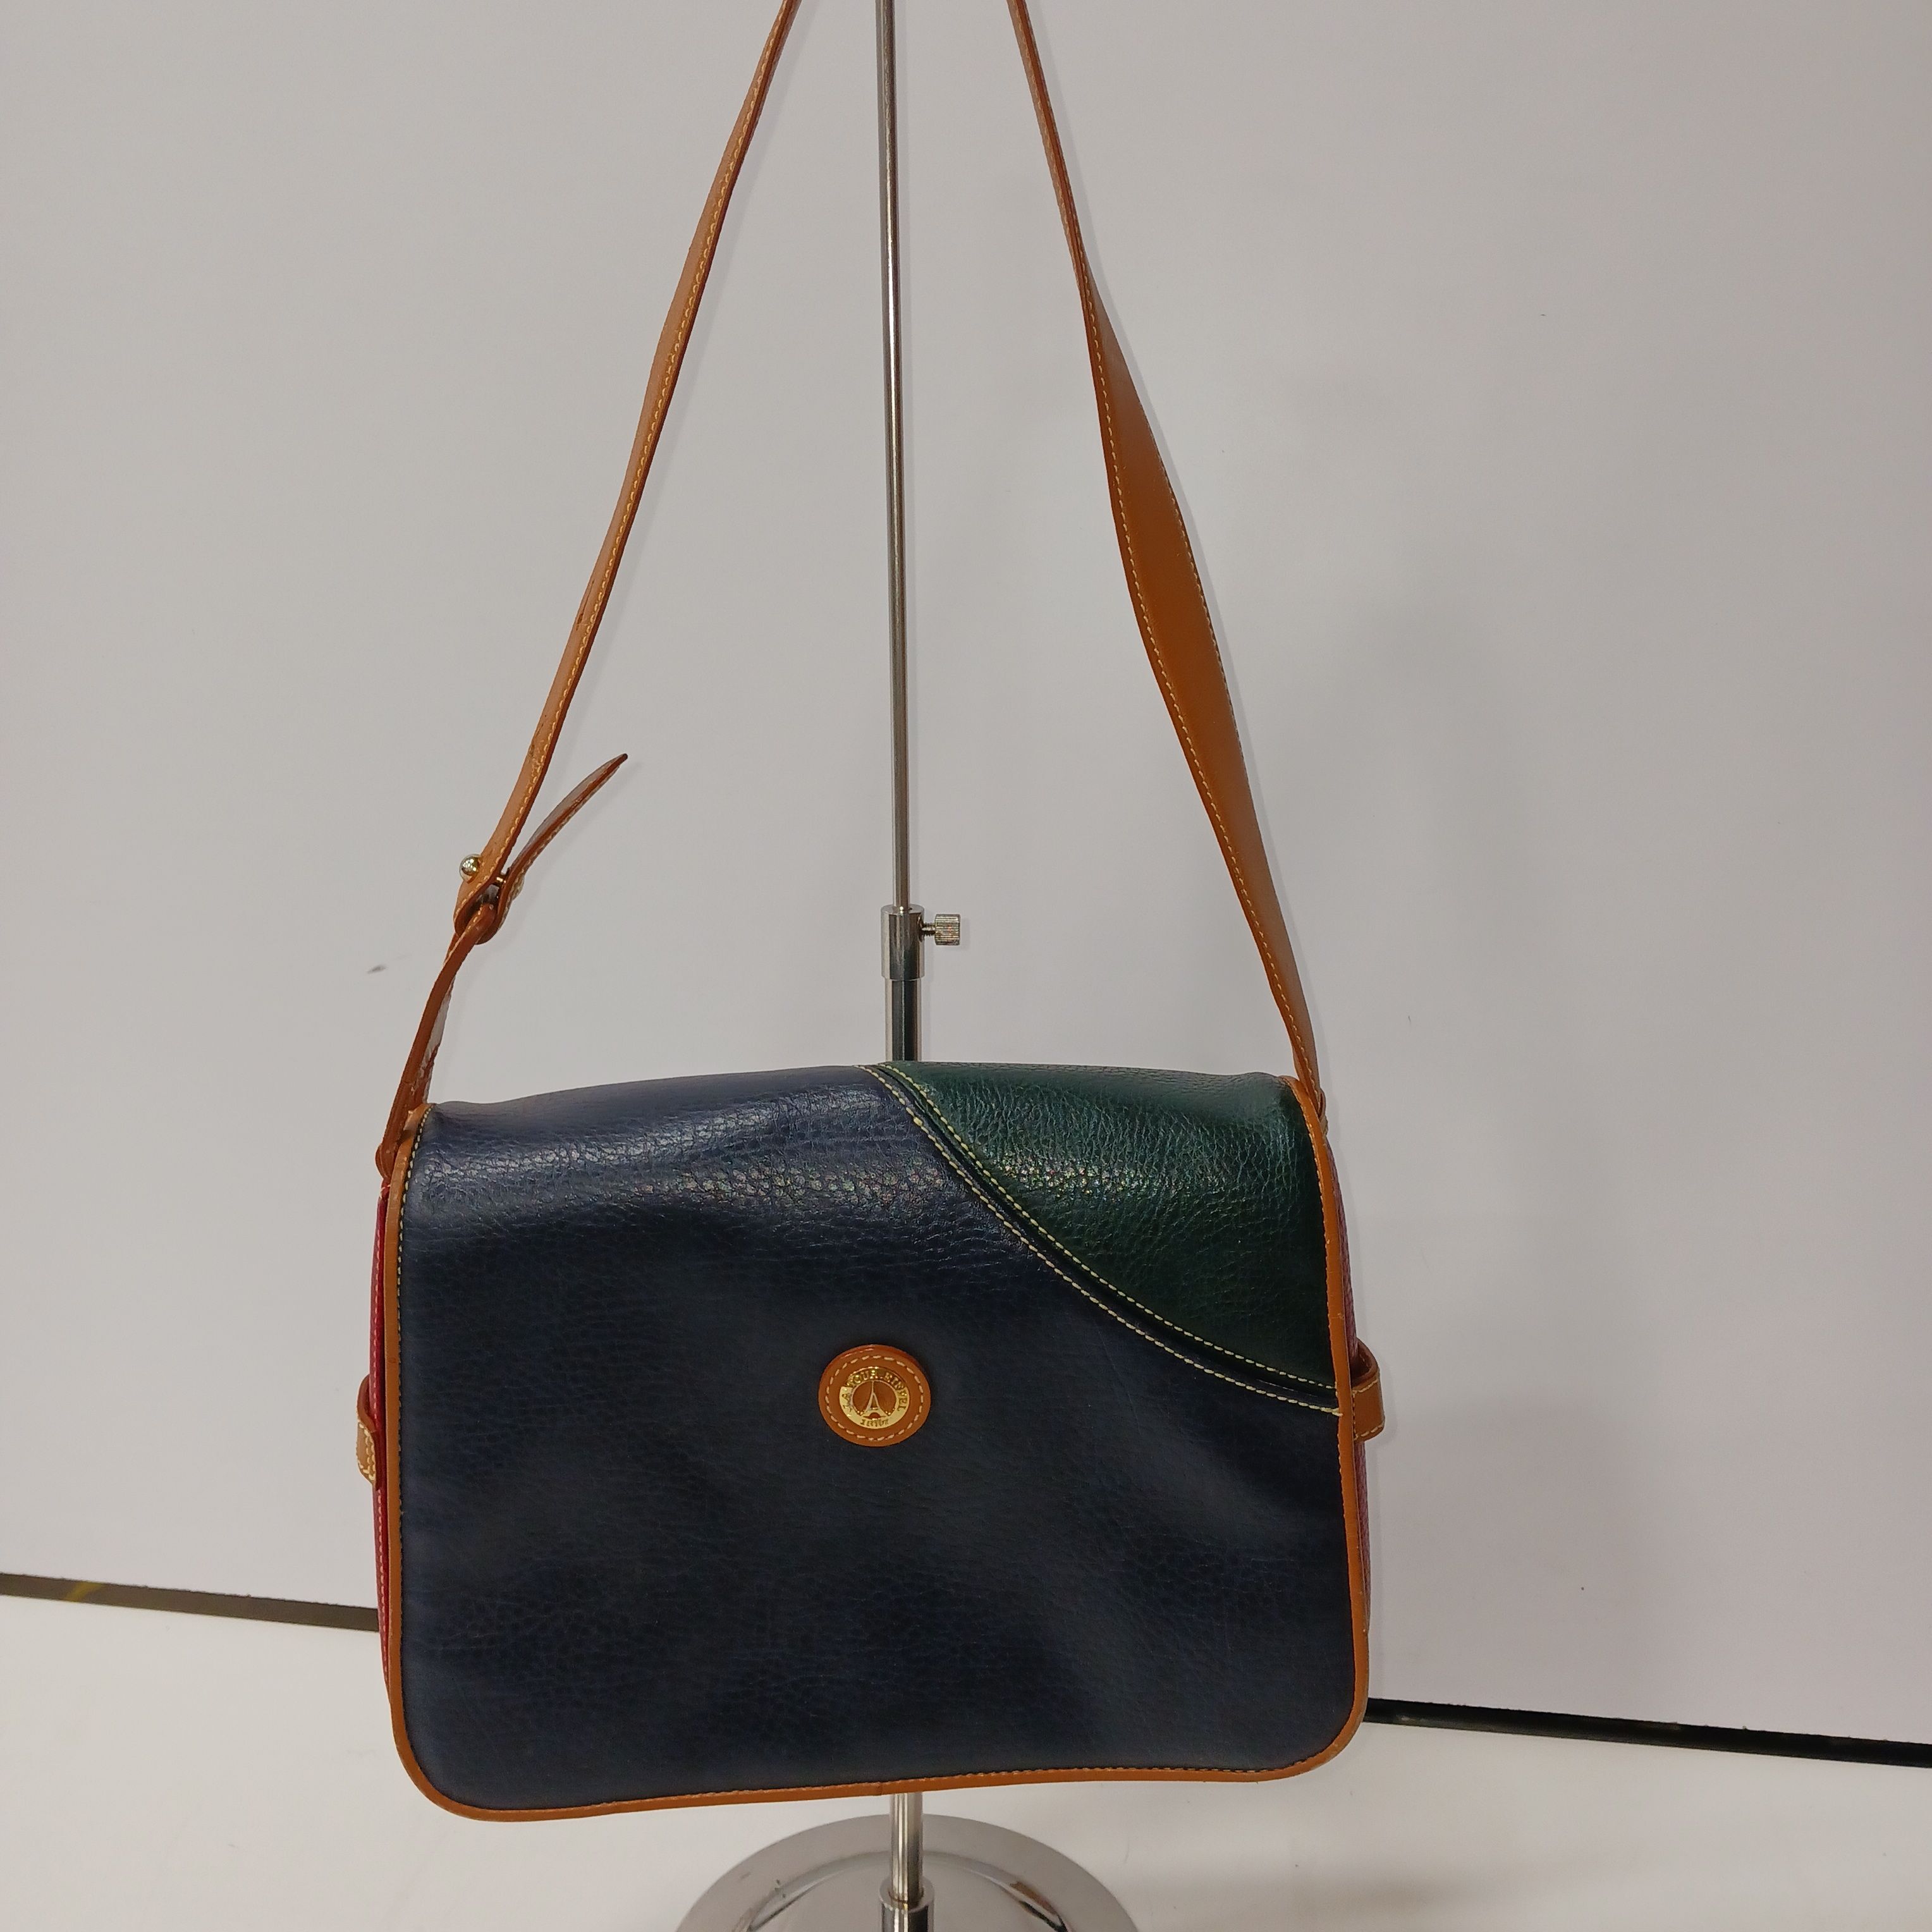 Buy Other brands La Tour Eiffel LA TOUR EIFFEL handbag leather navy green /  050538 [used] from Japan - Buy authentic Plus exclusive items from Japan |  ZenPlus